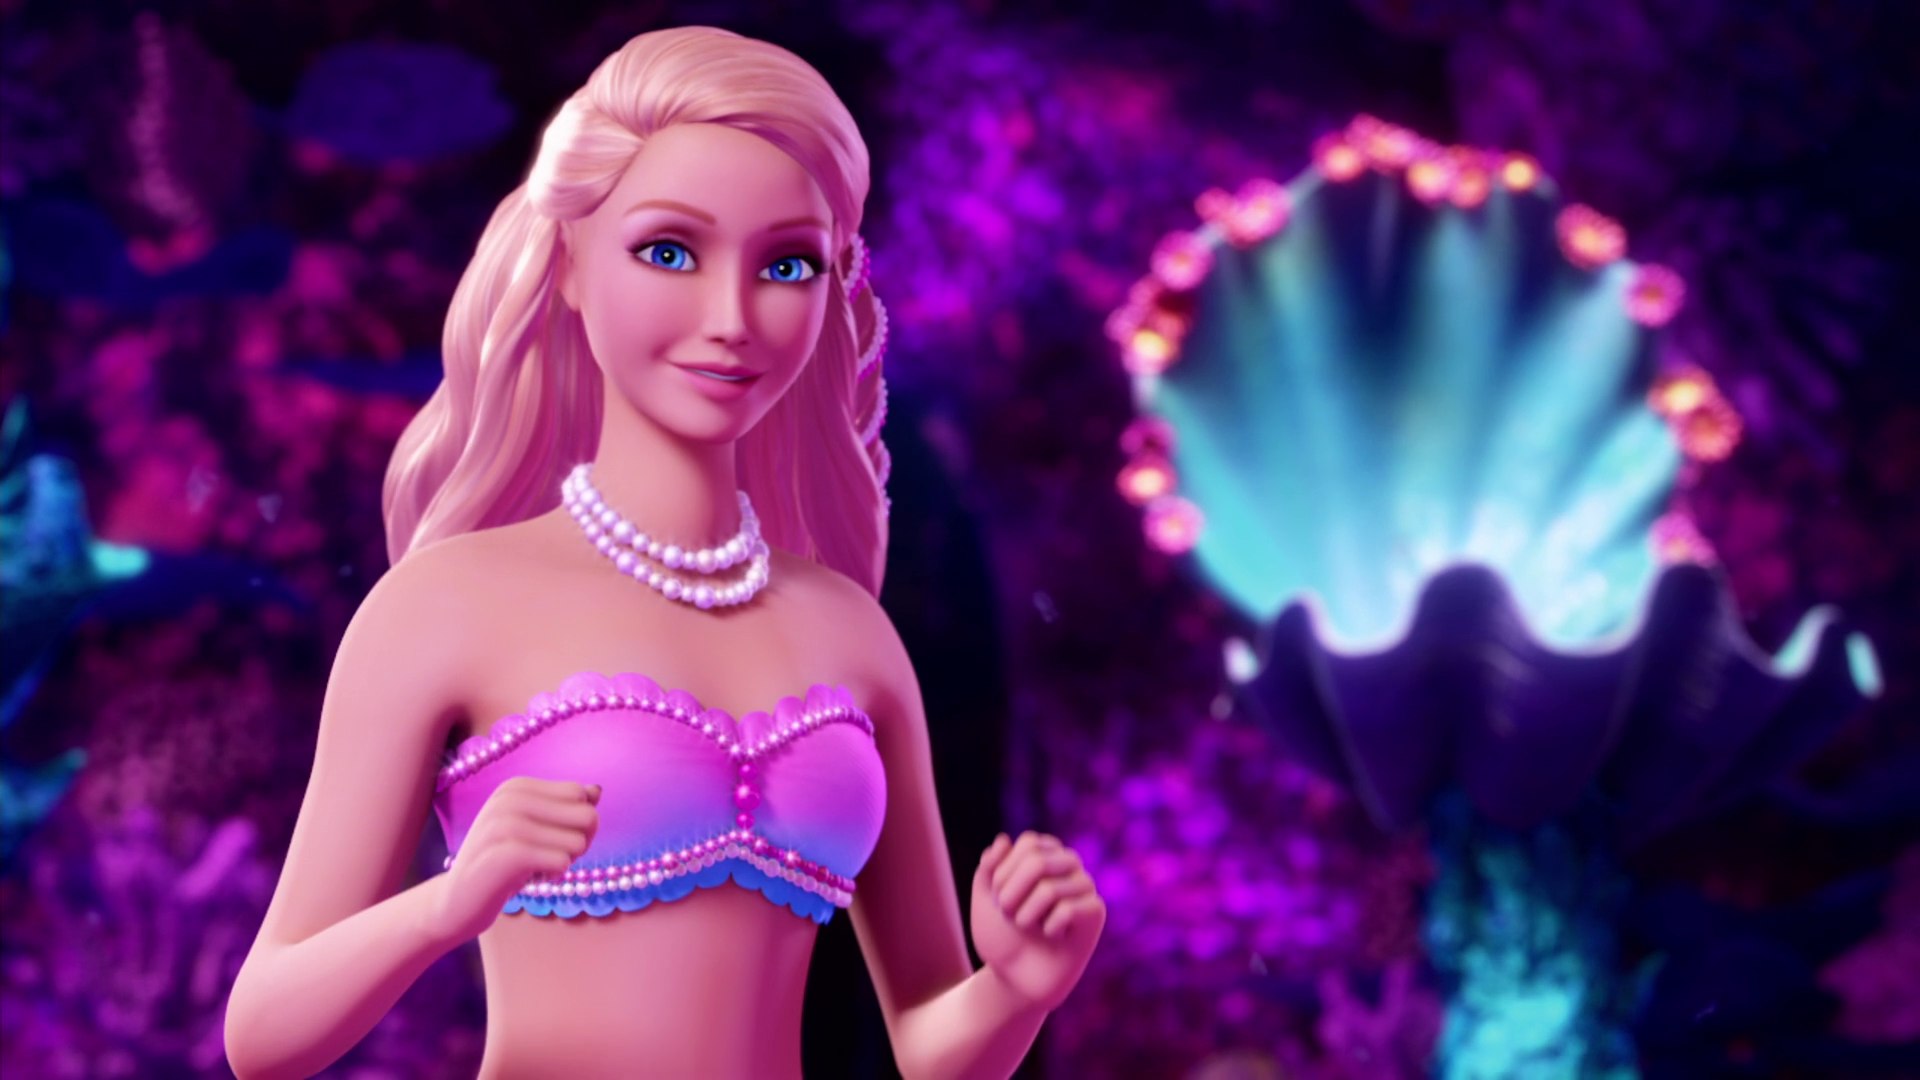 barbie pearl princess